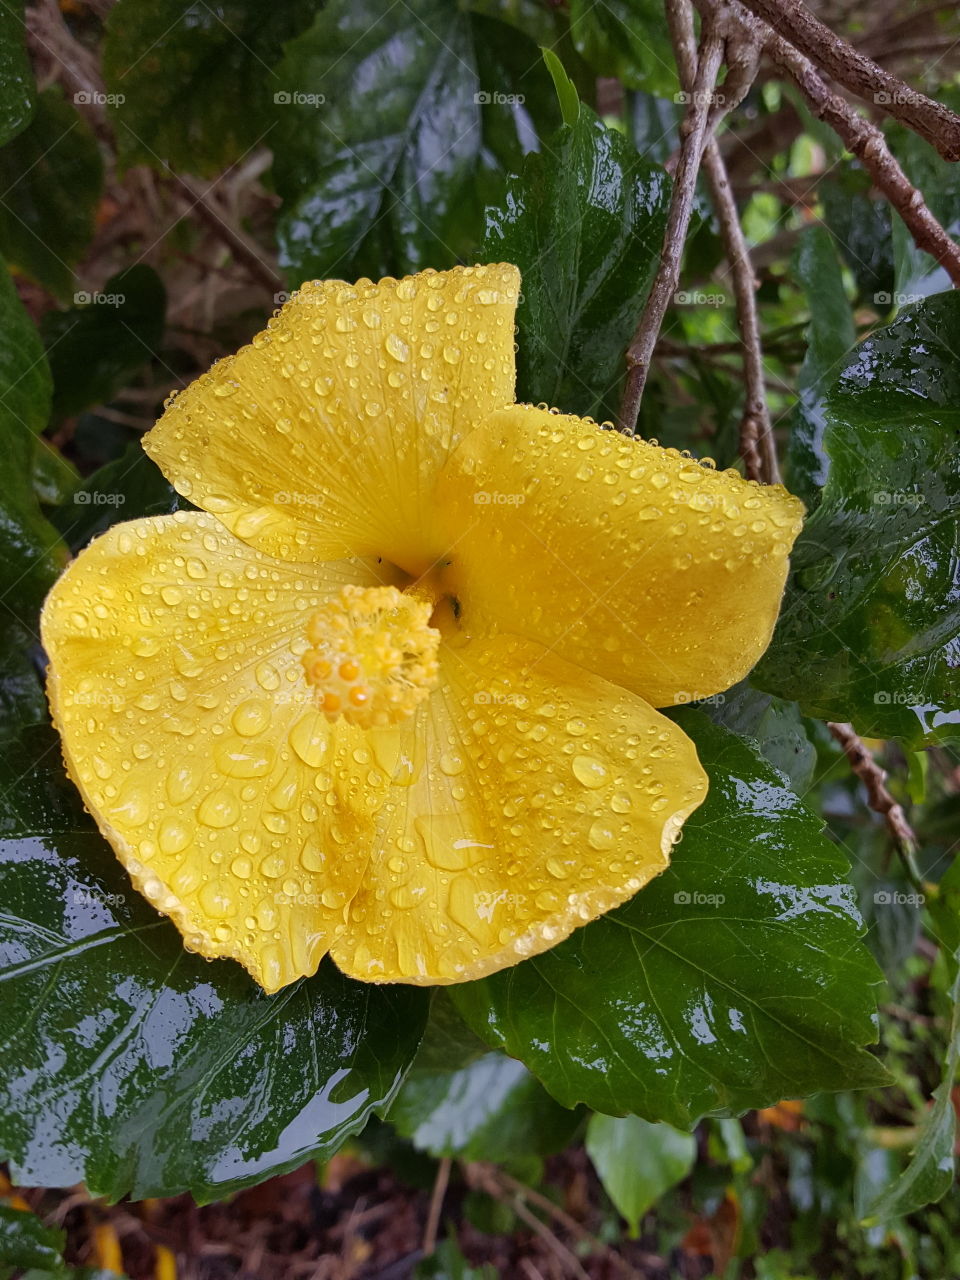 Rainy day bloom!